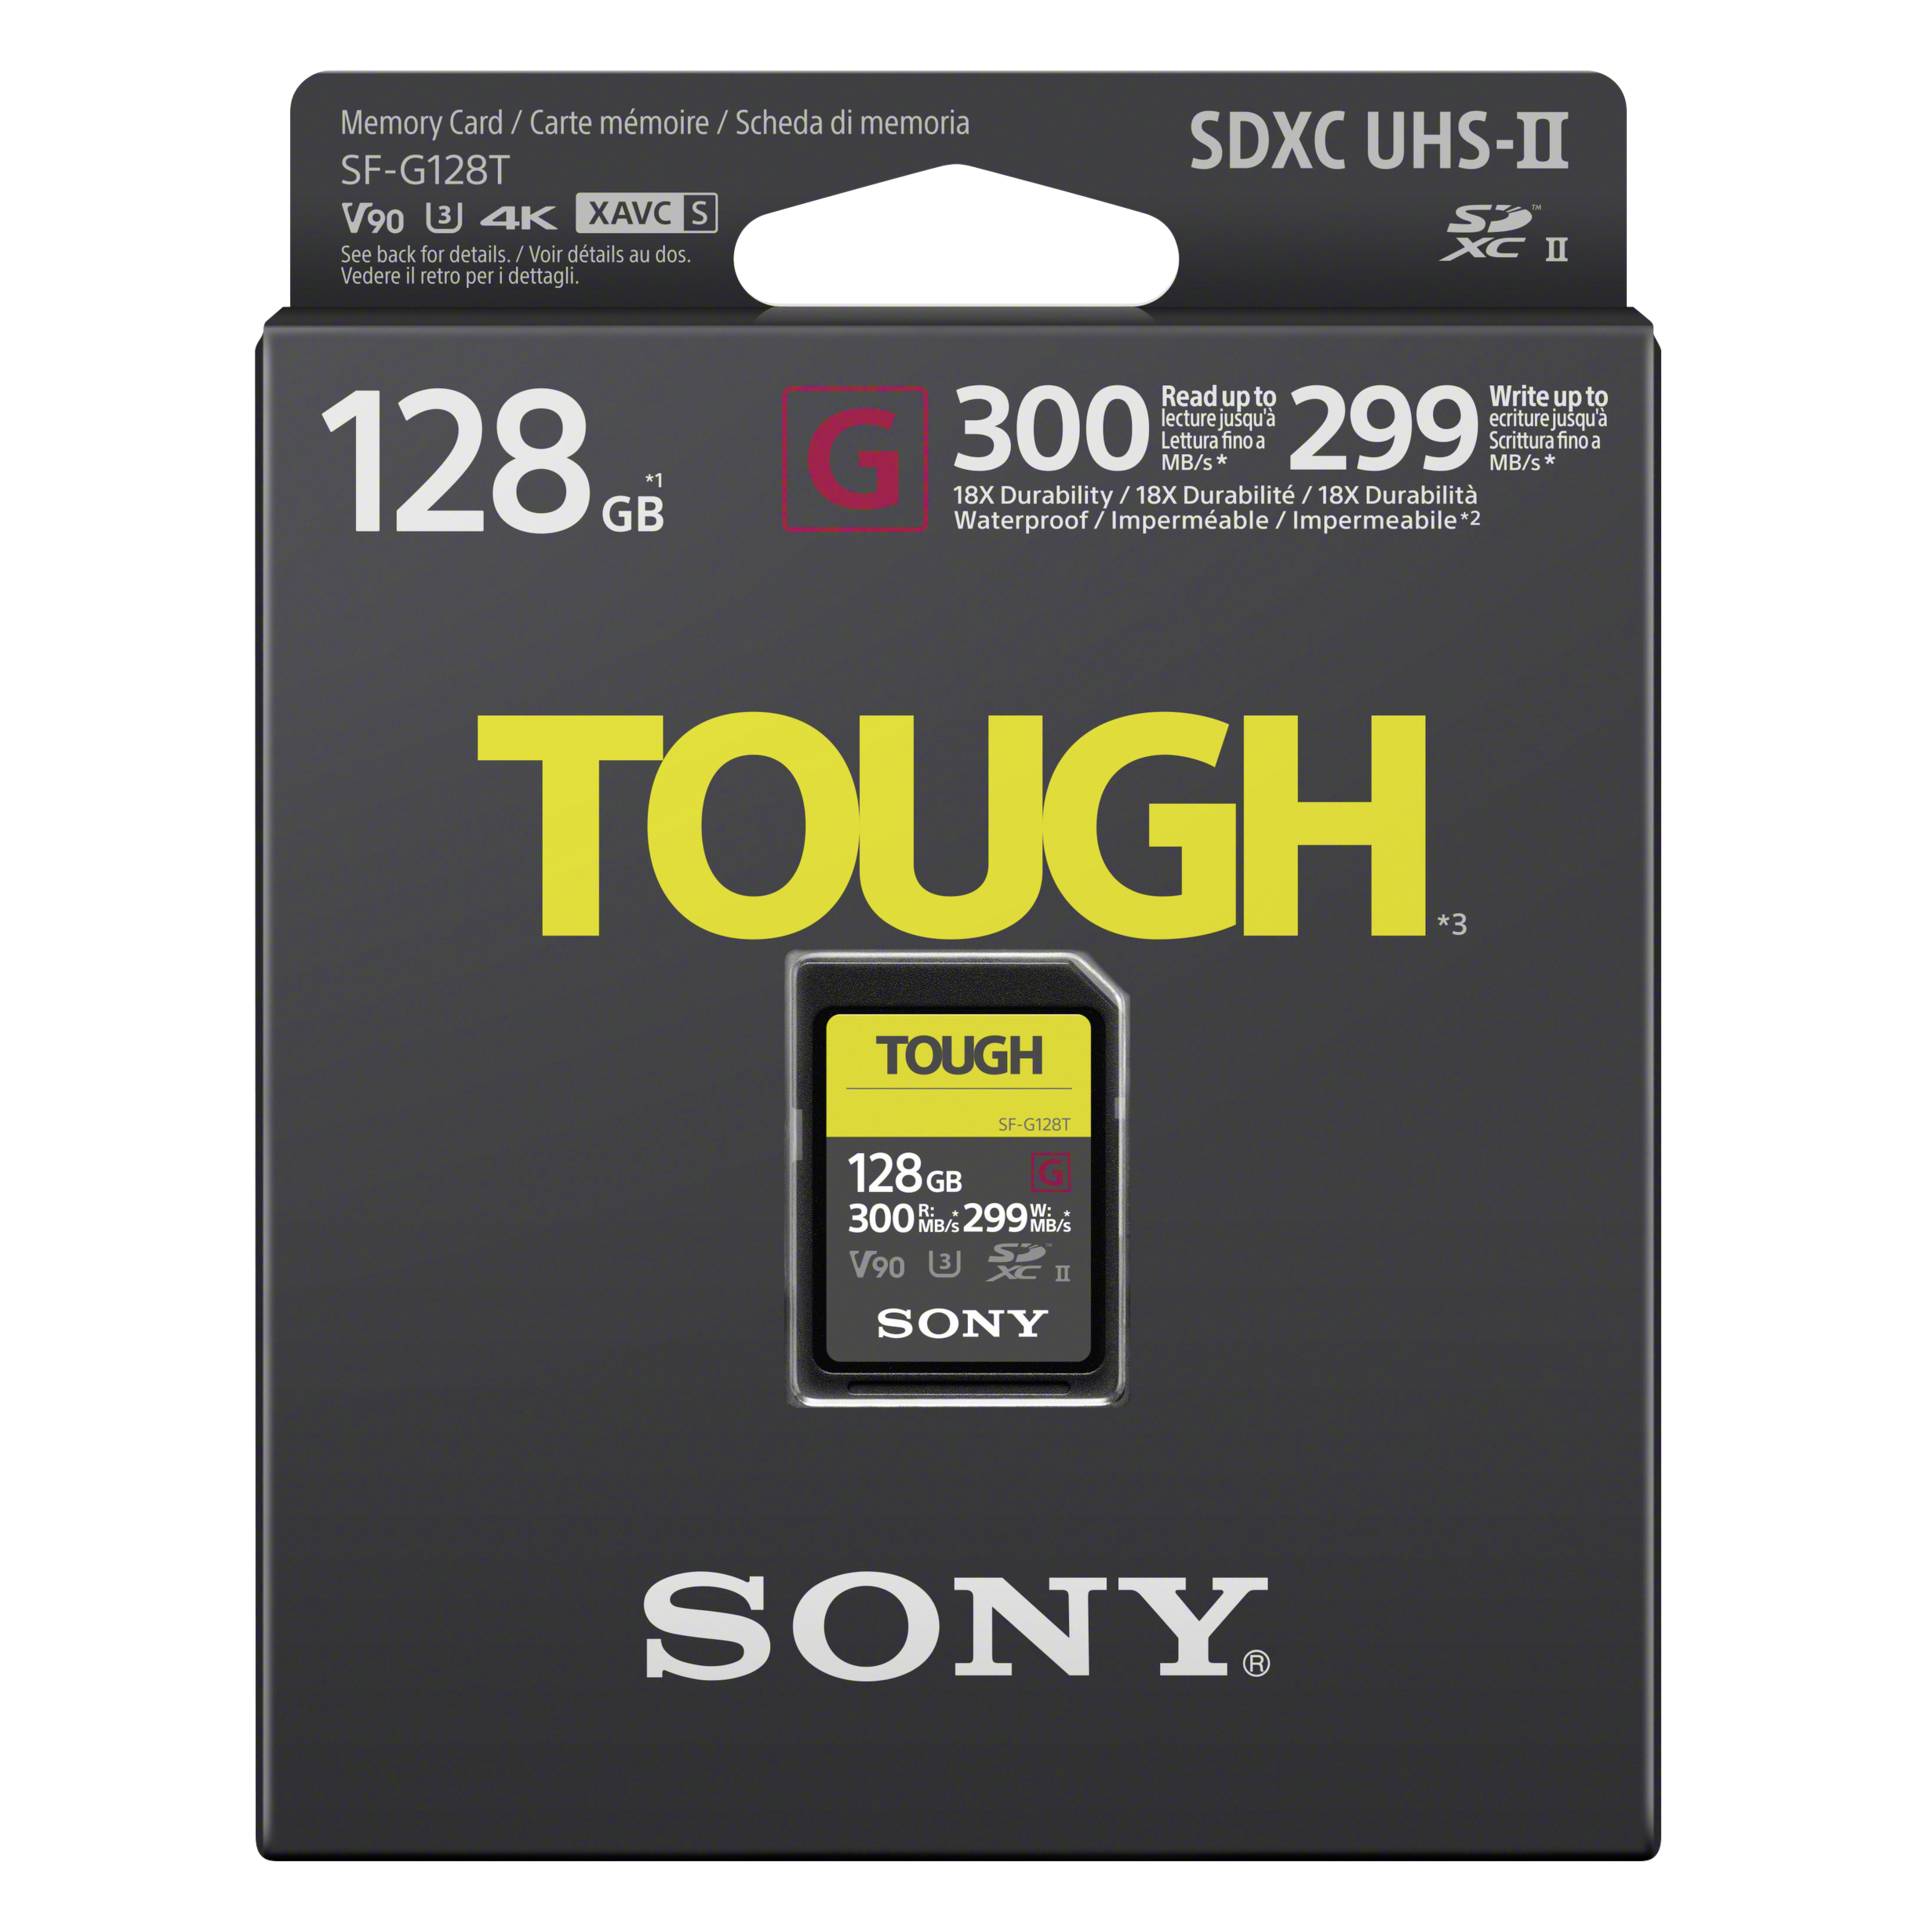 128GB Sony SF-G Tough Series SDXC Speicherkarte, lesen: 300MB/s, schreiben: 299MB/s